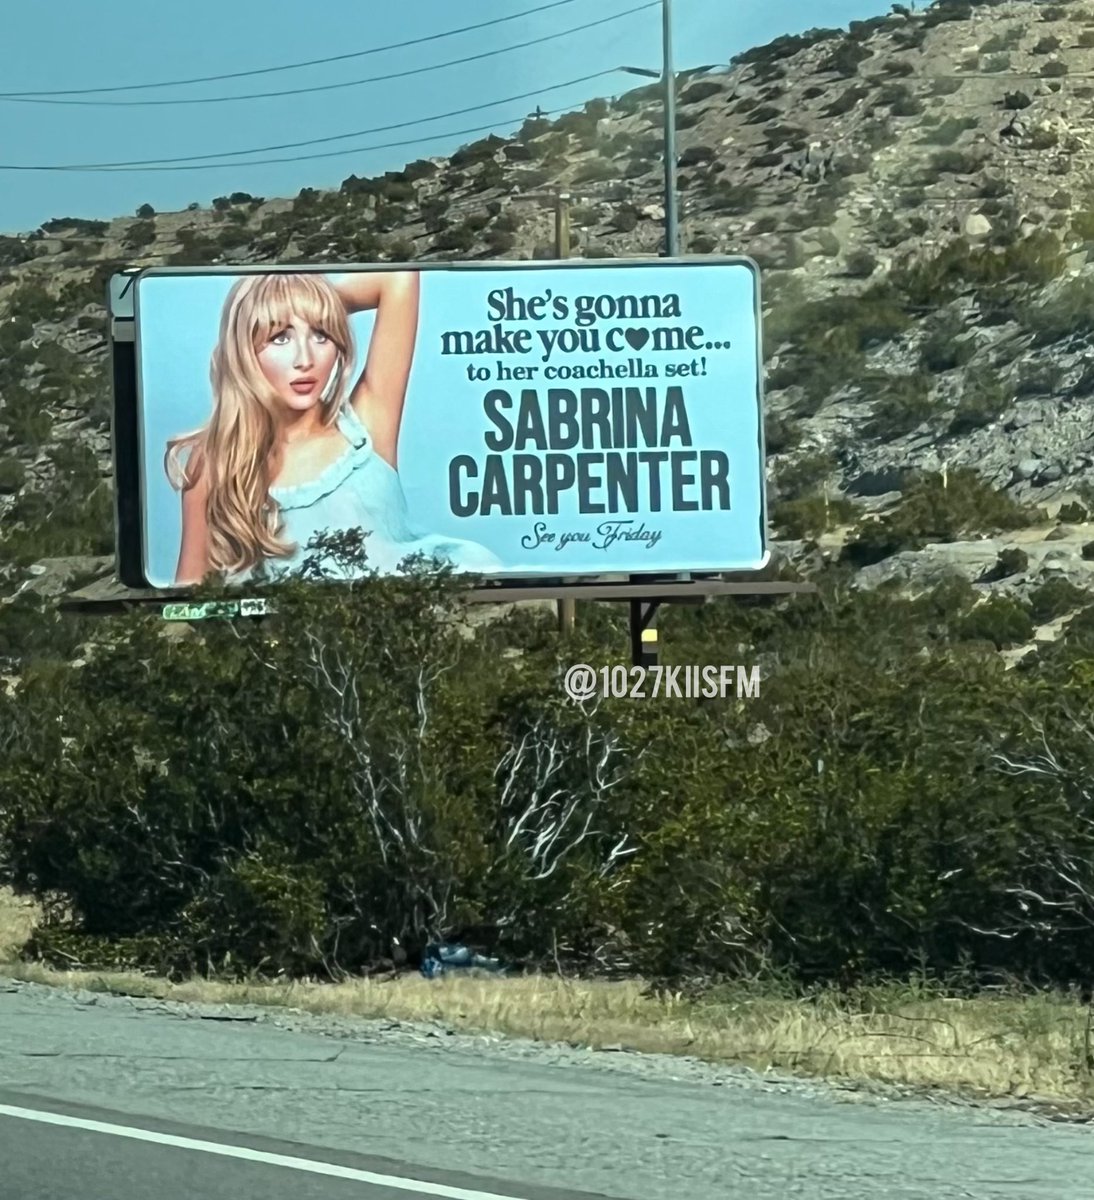 See you there queen #SabrinaCarpenter 🫡 ☕️ #Coachella